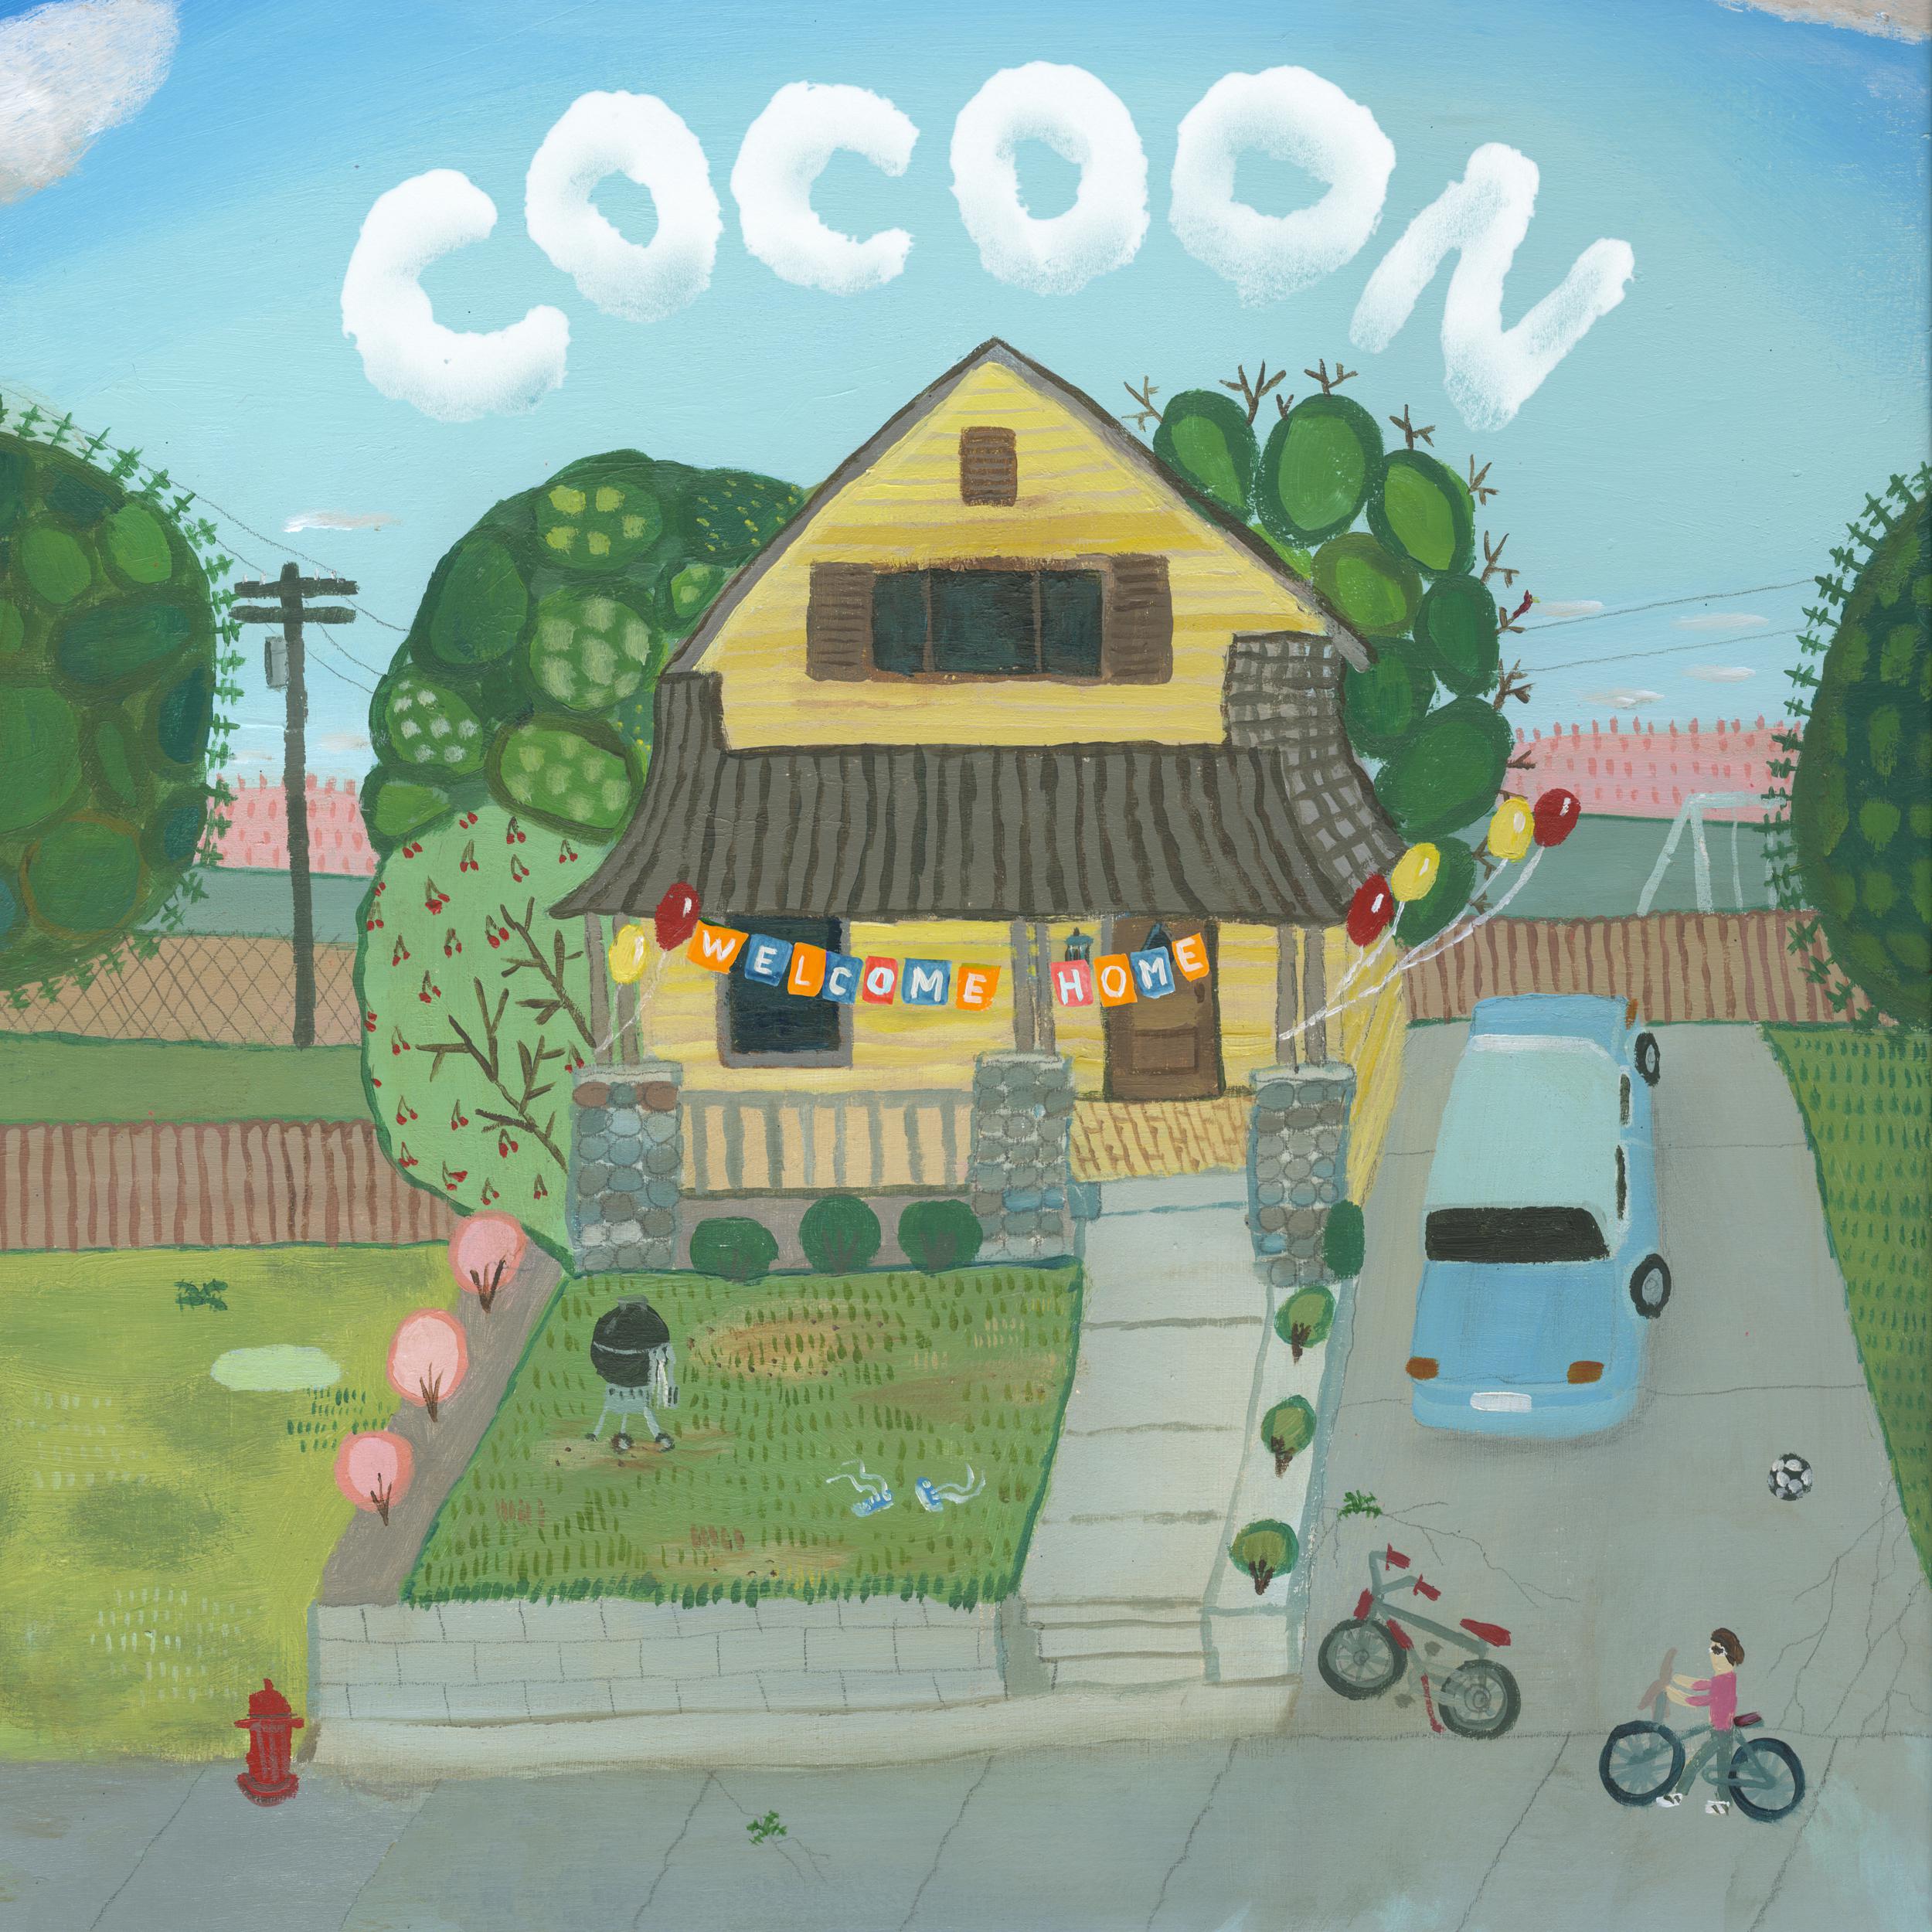 Cocoon - Retreat